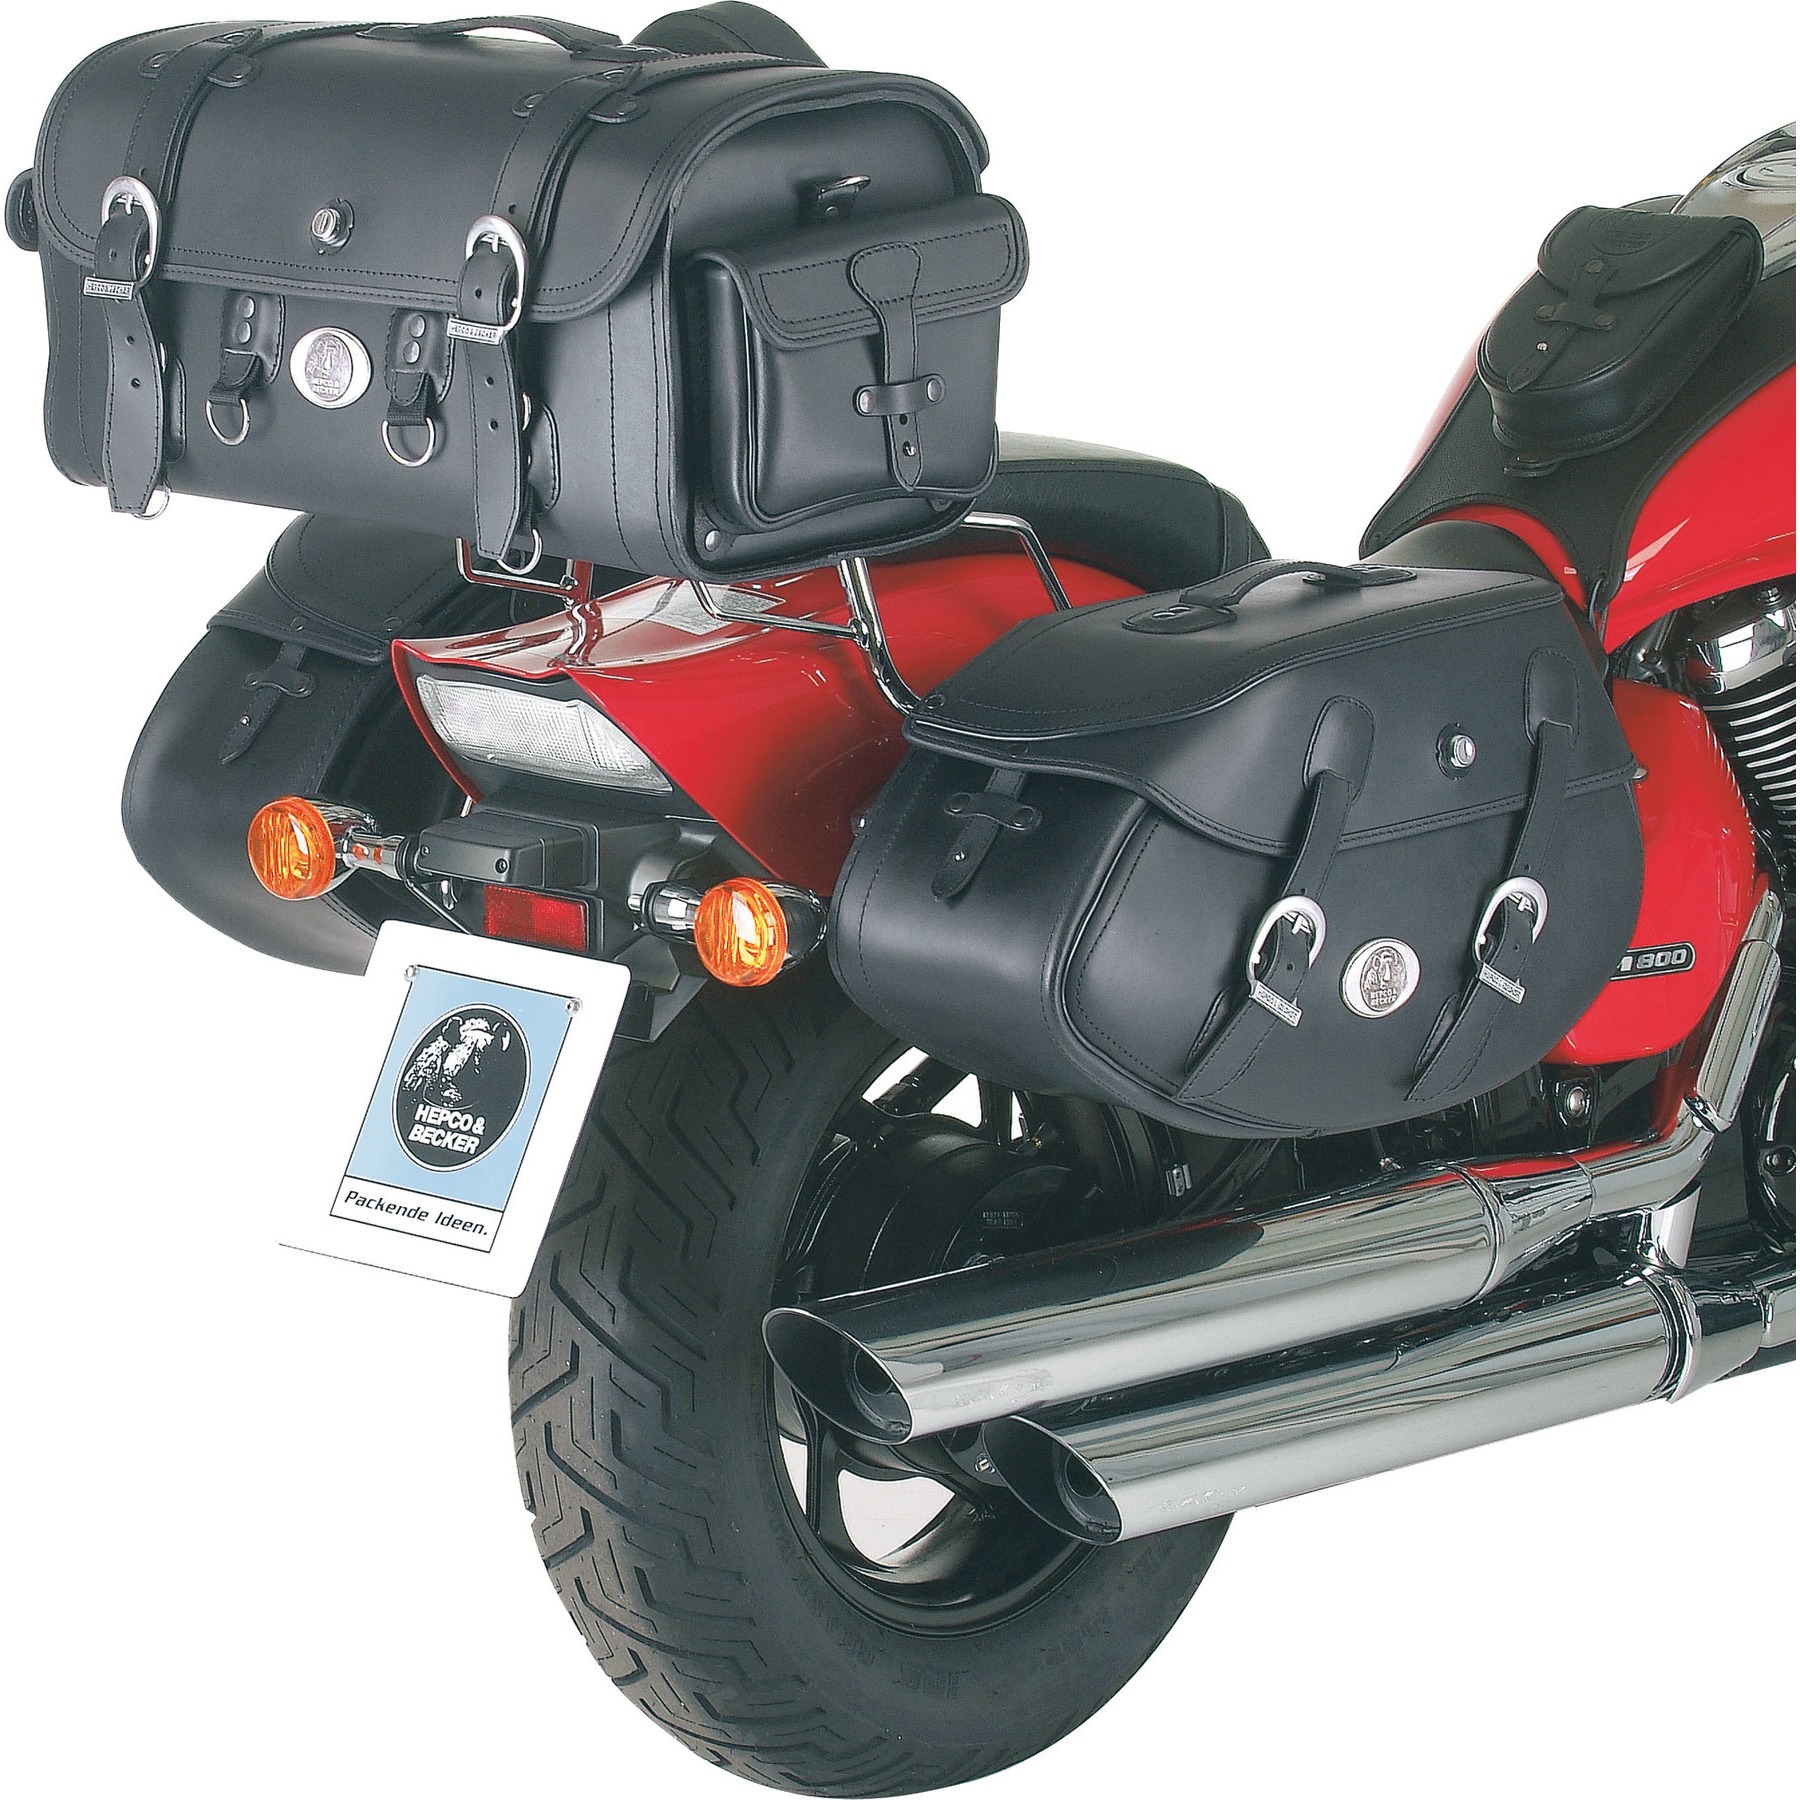 zwart leer motorcycle saddlebags new arrivals 5f756 fd46b